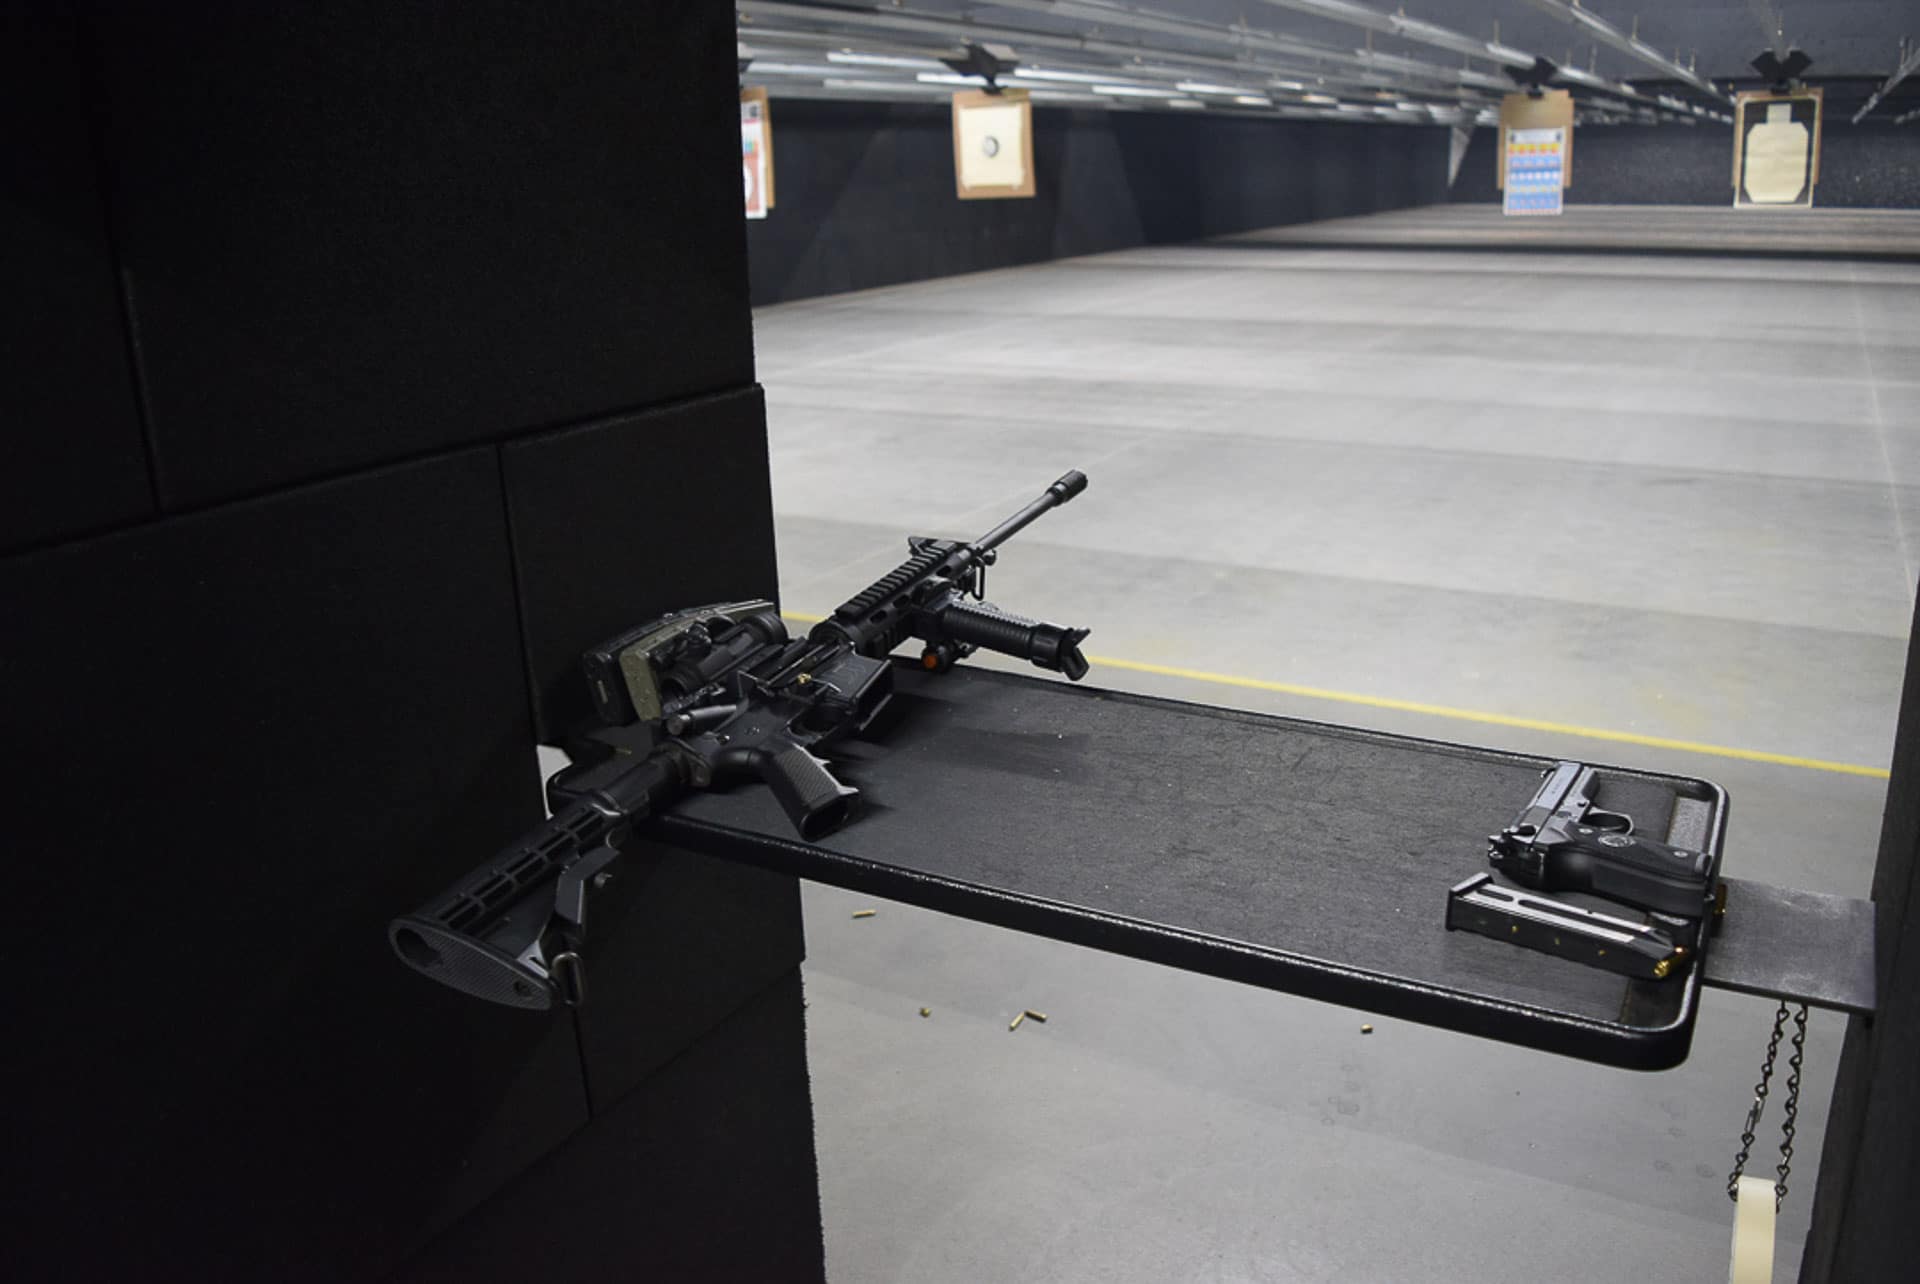 Sacramento Gun Range Rules - Maintain Safety at our Indoor Rage